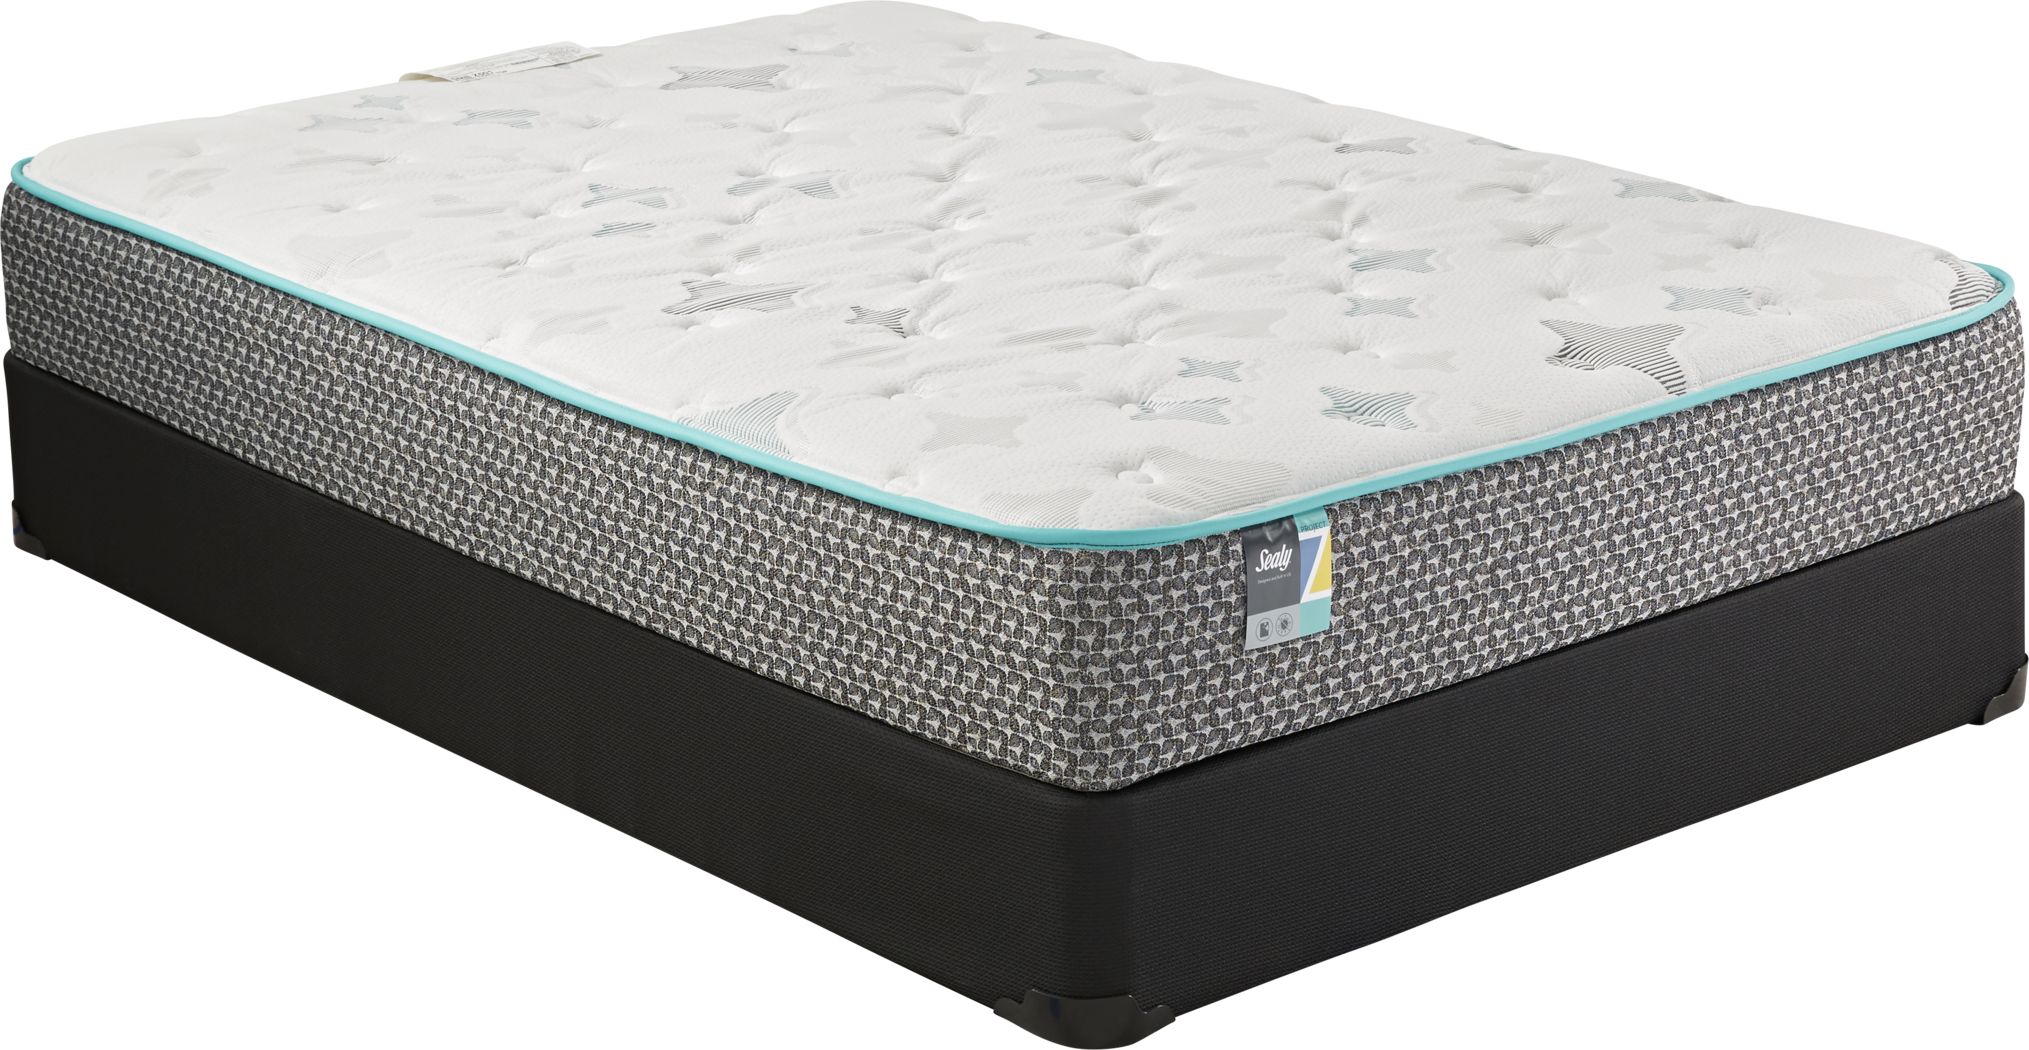 sears sealy mattress full size